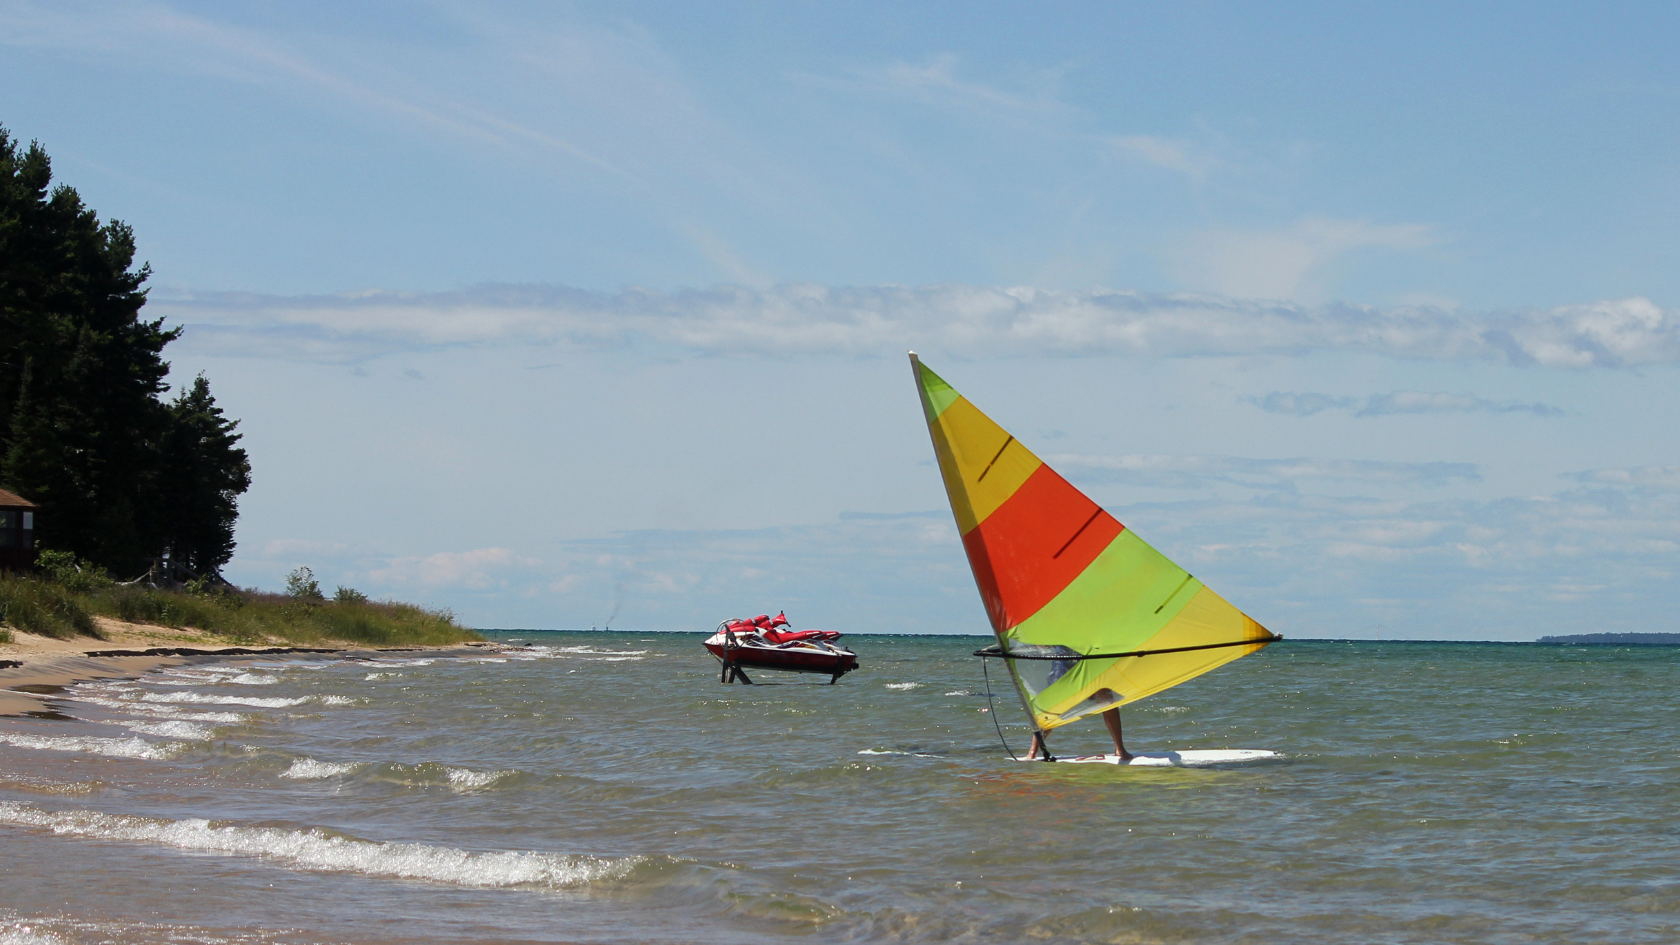 Lake Huron Staycation windsurfer and boat